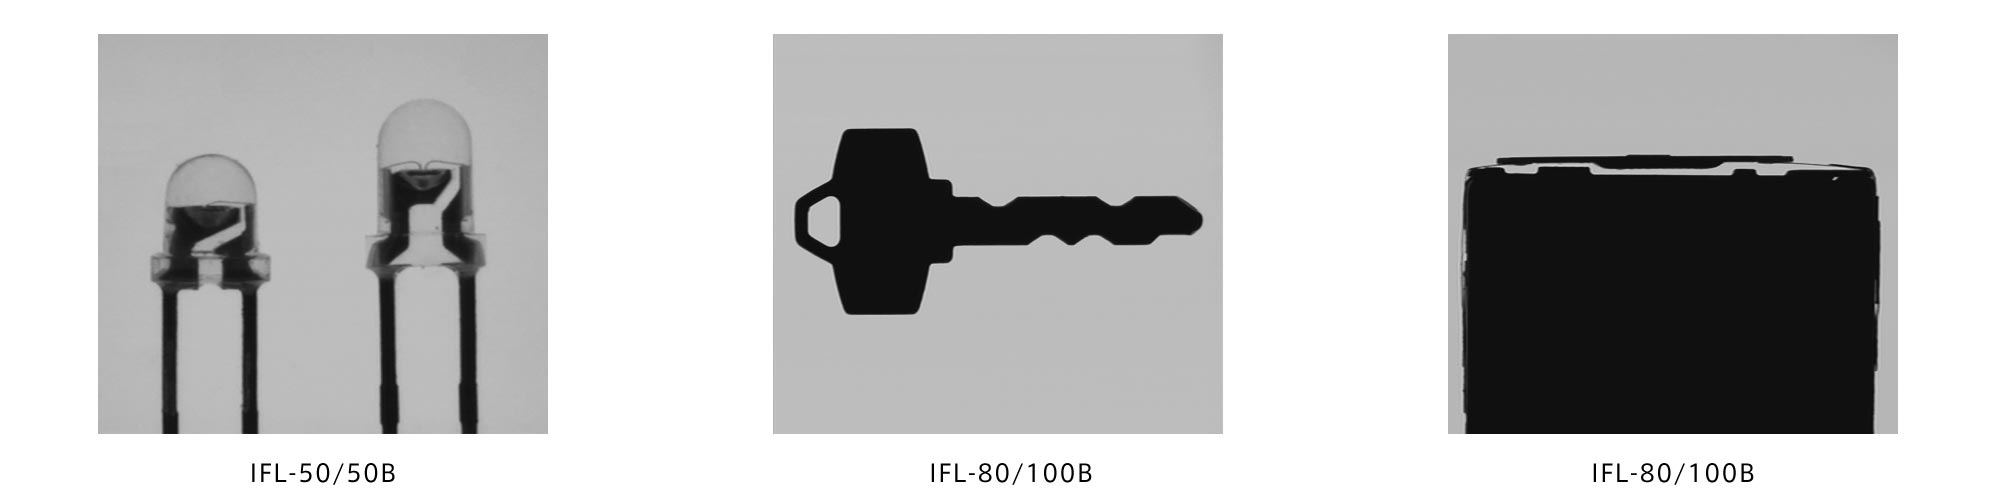 IFL产品说明01